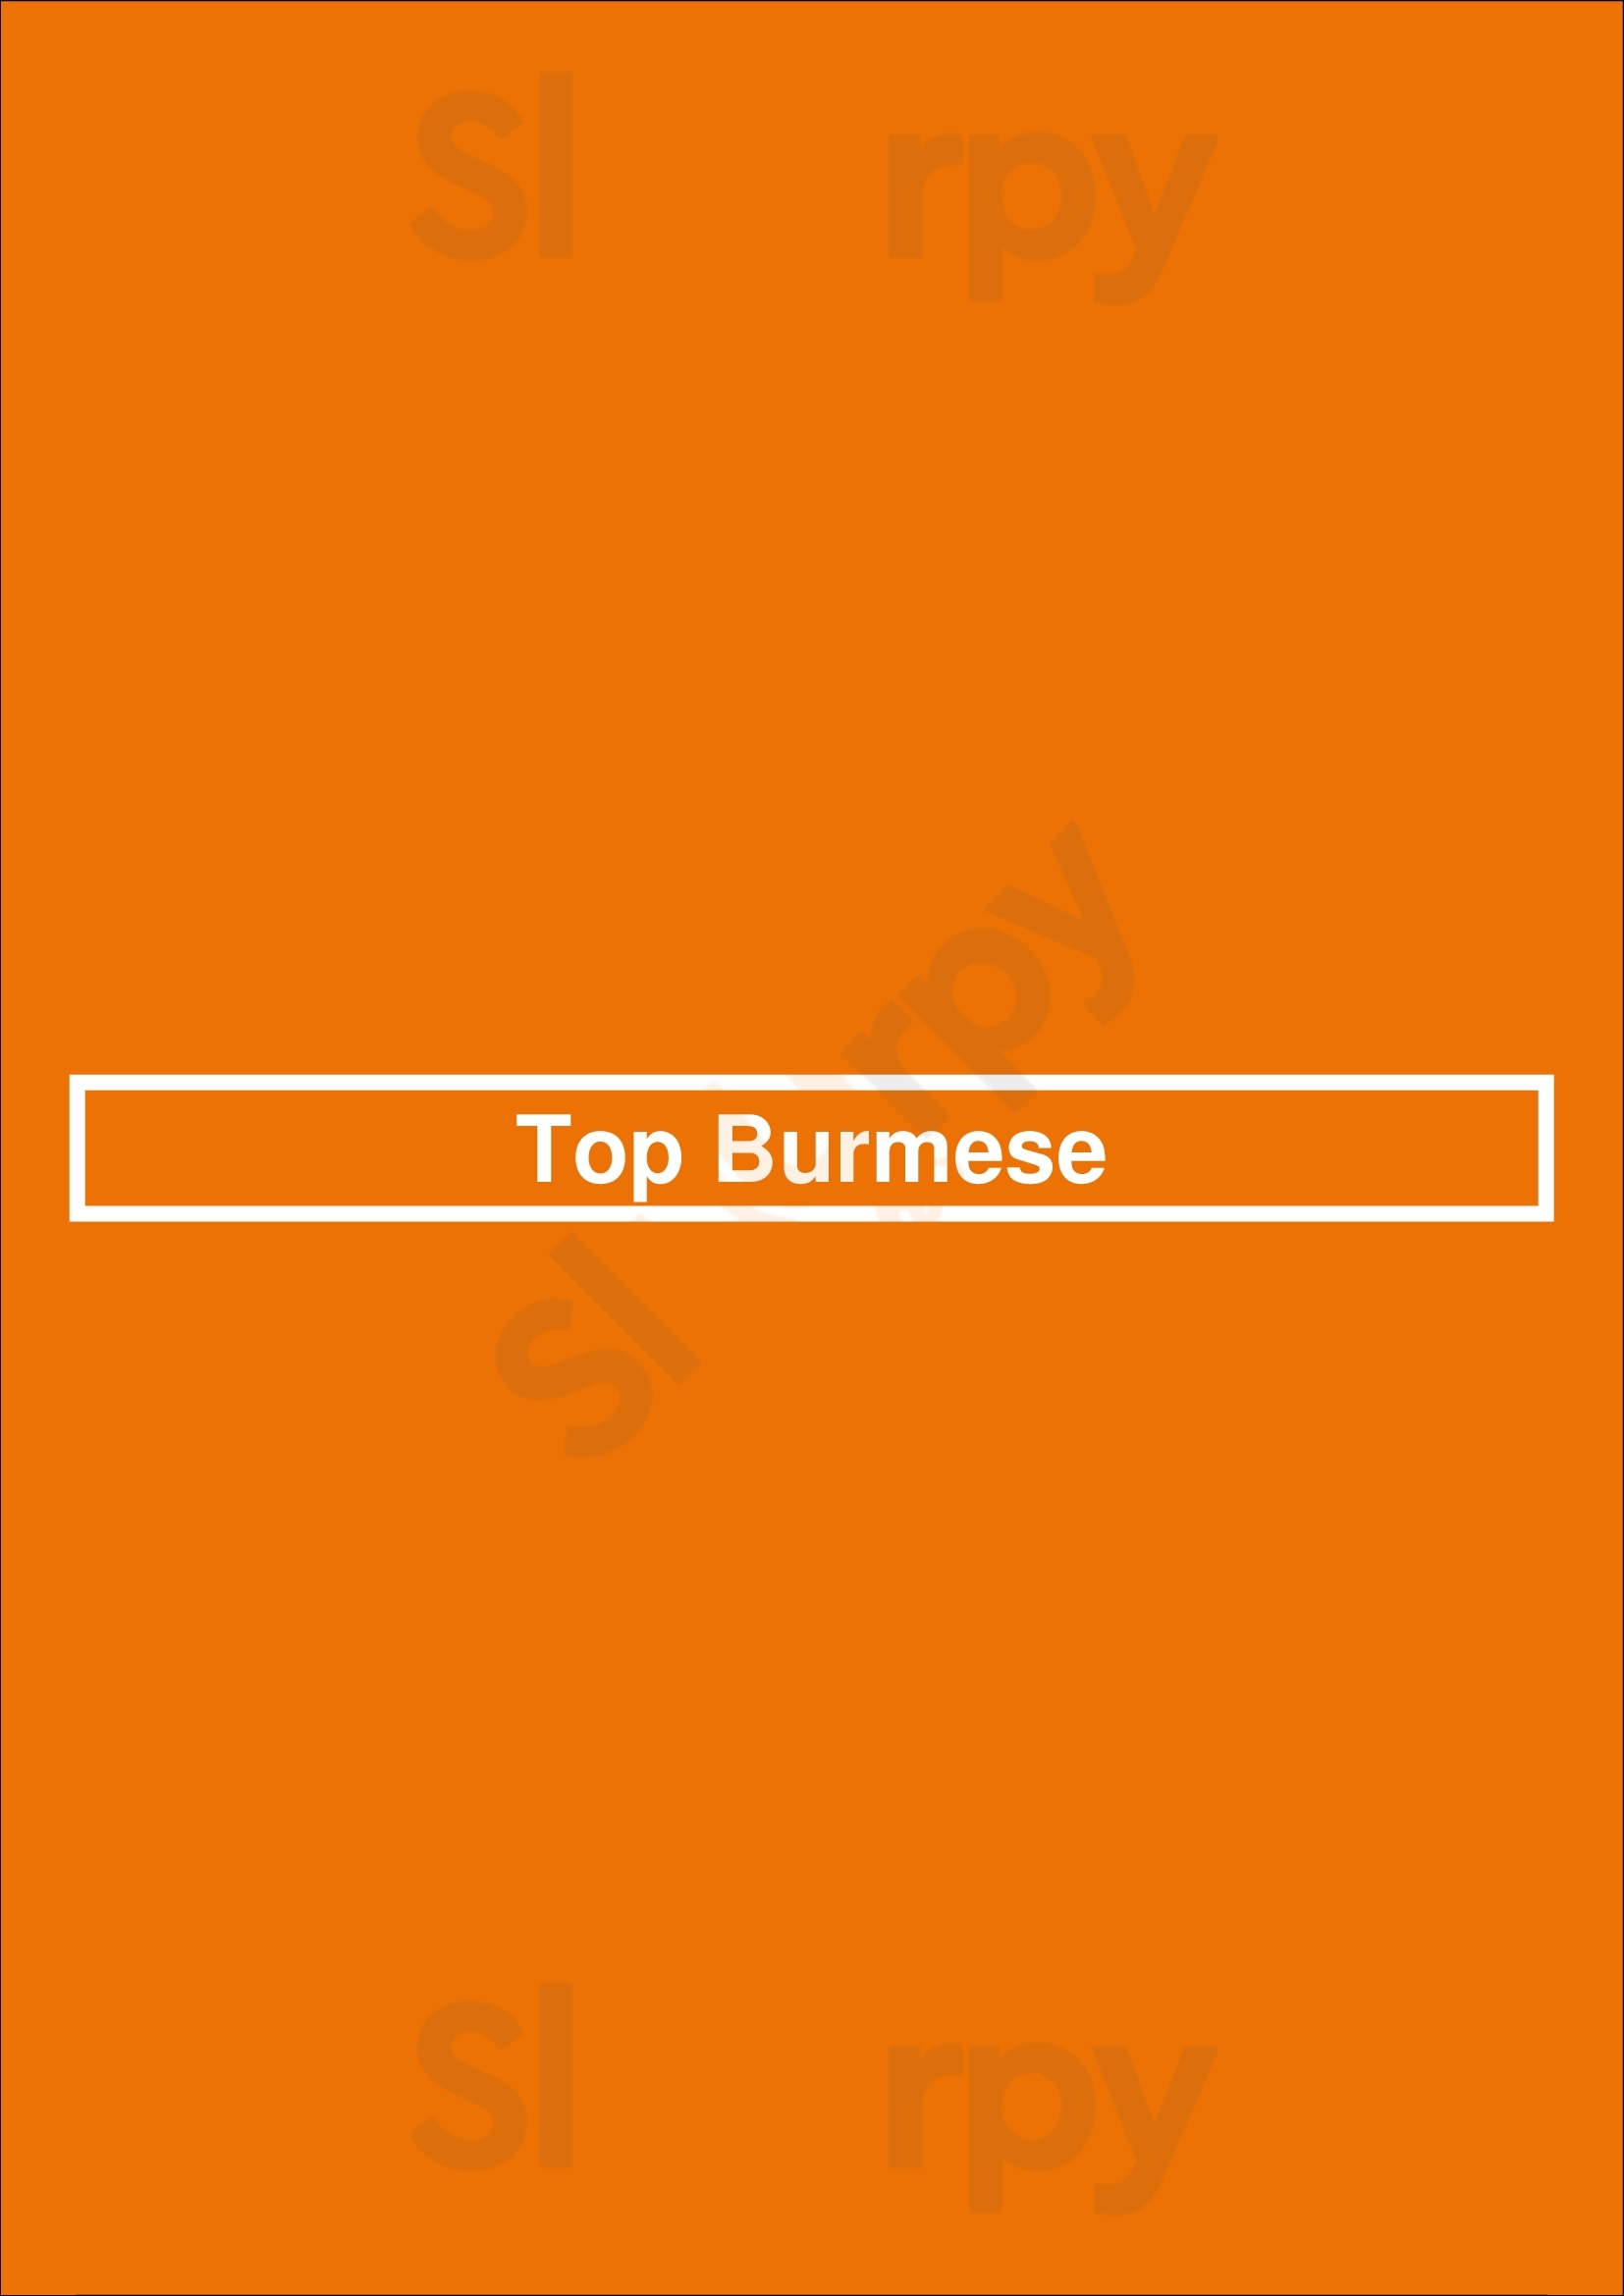 Top Burmese Portland Menu - 1